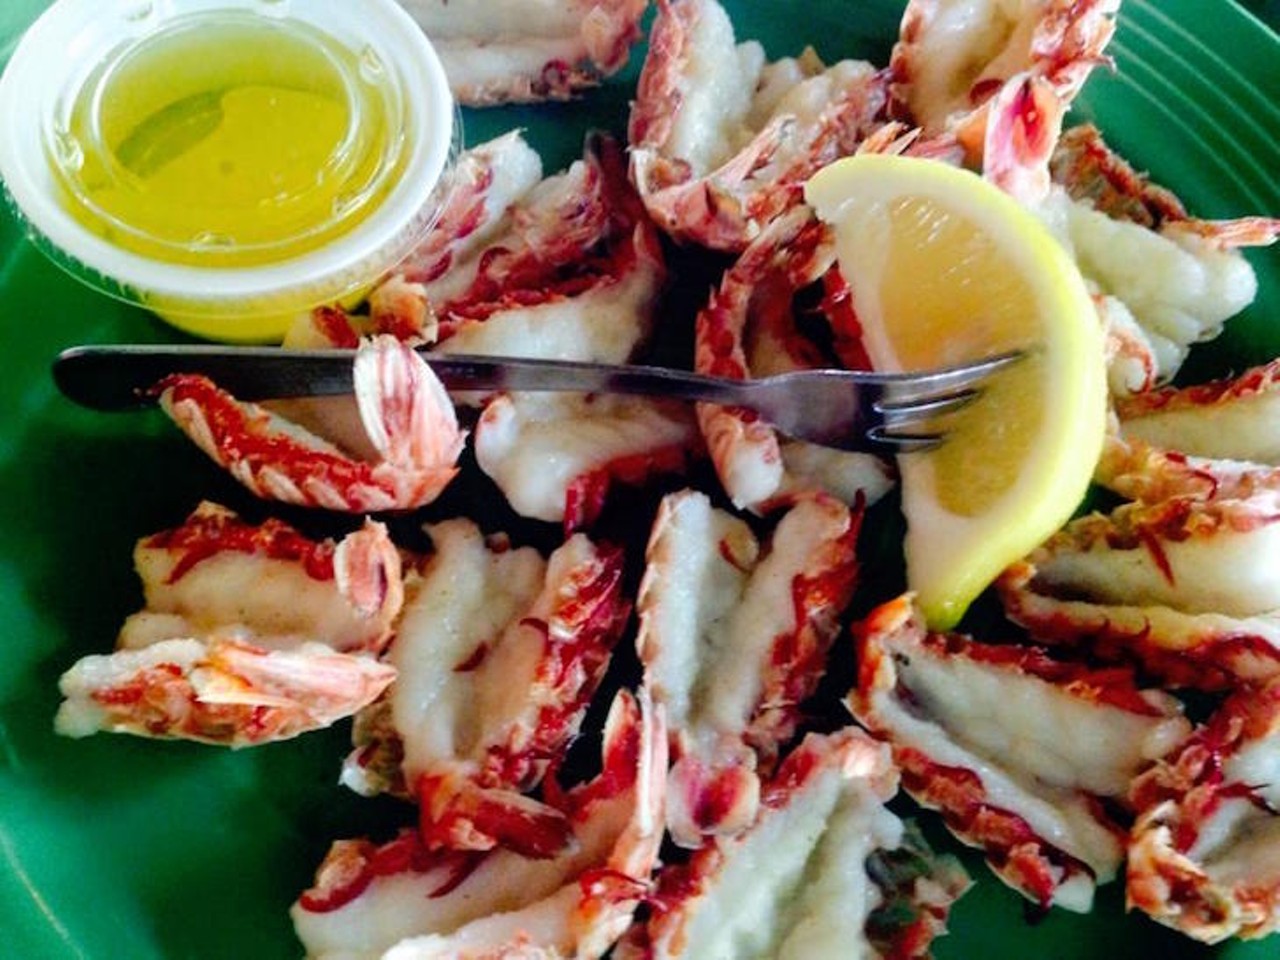 The &#147;Rock shrimp&#148; looks like it's on point. 
Photo via vegan.latina4ever/Instagram